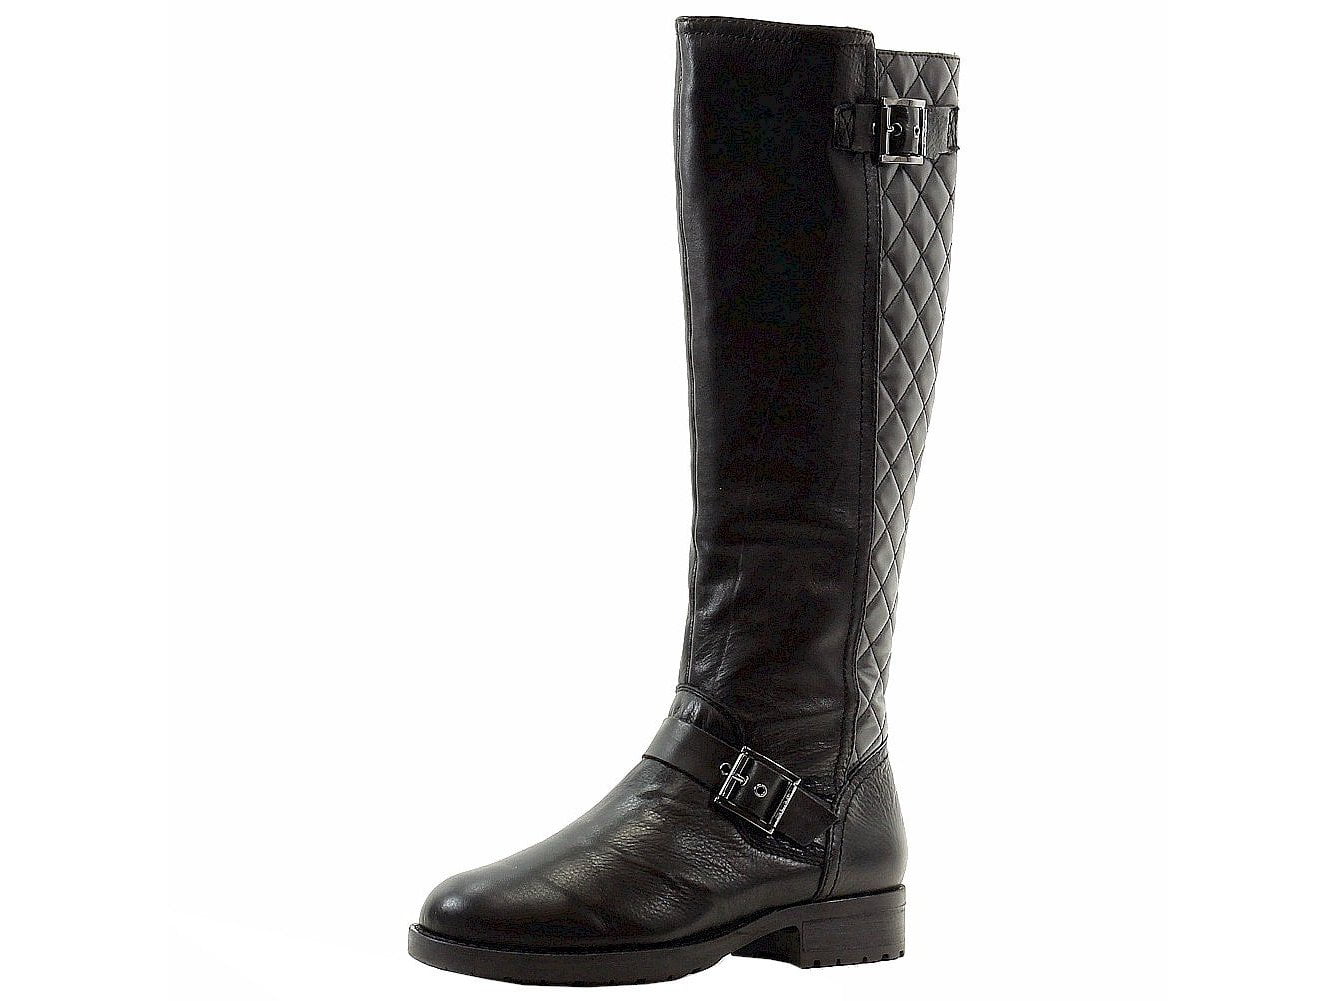 DKNY Womens Mattie Leather Almond Toe High Fashion Boots, Black, Size 6.0 - Walmart.com